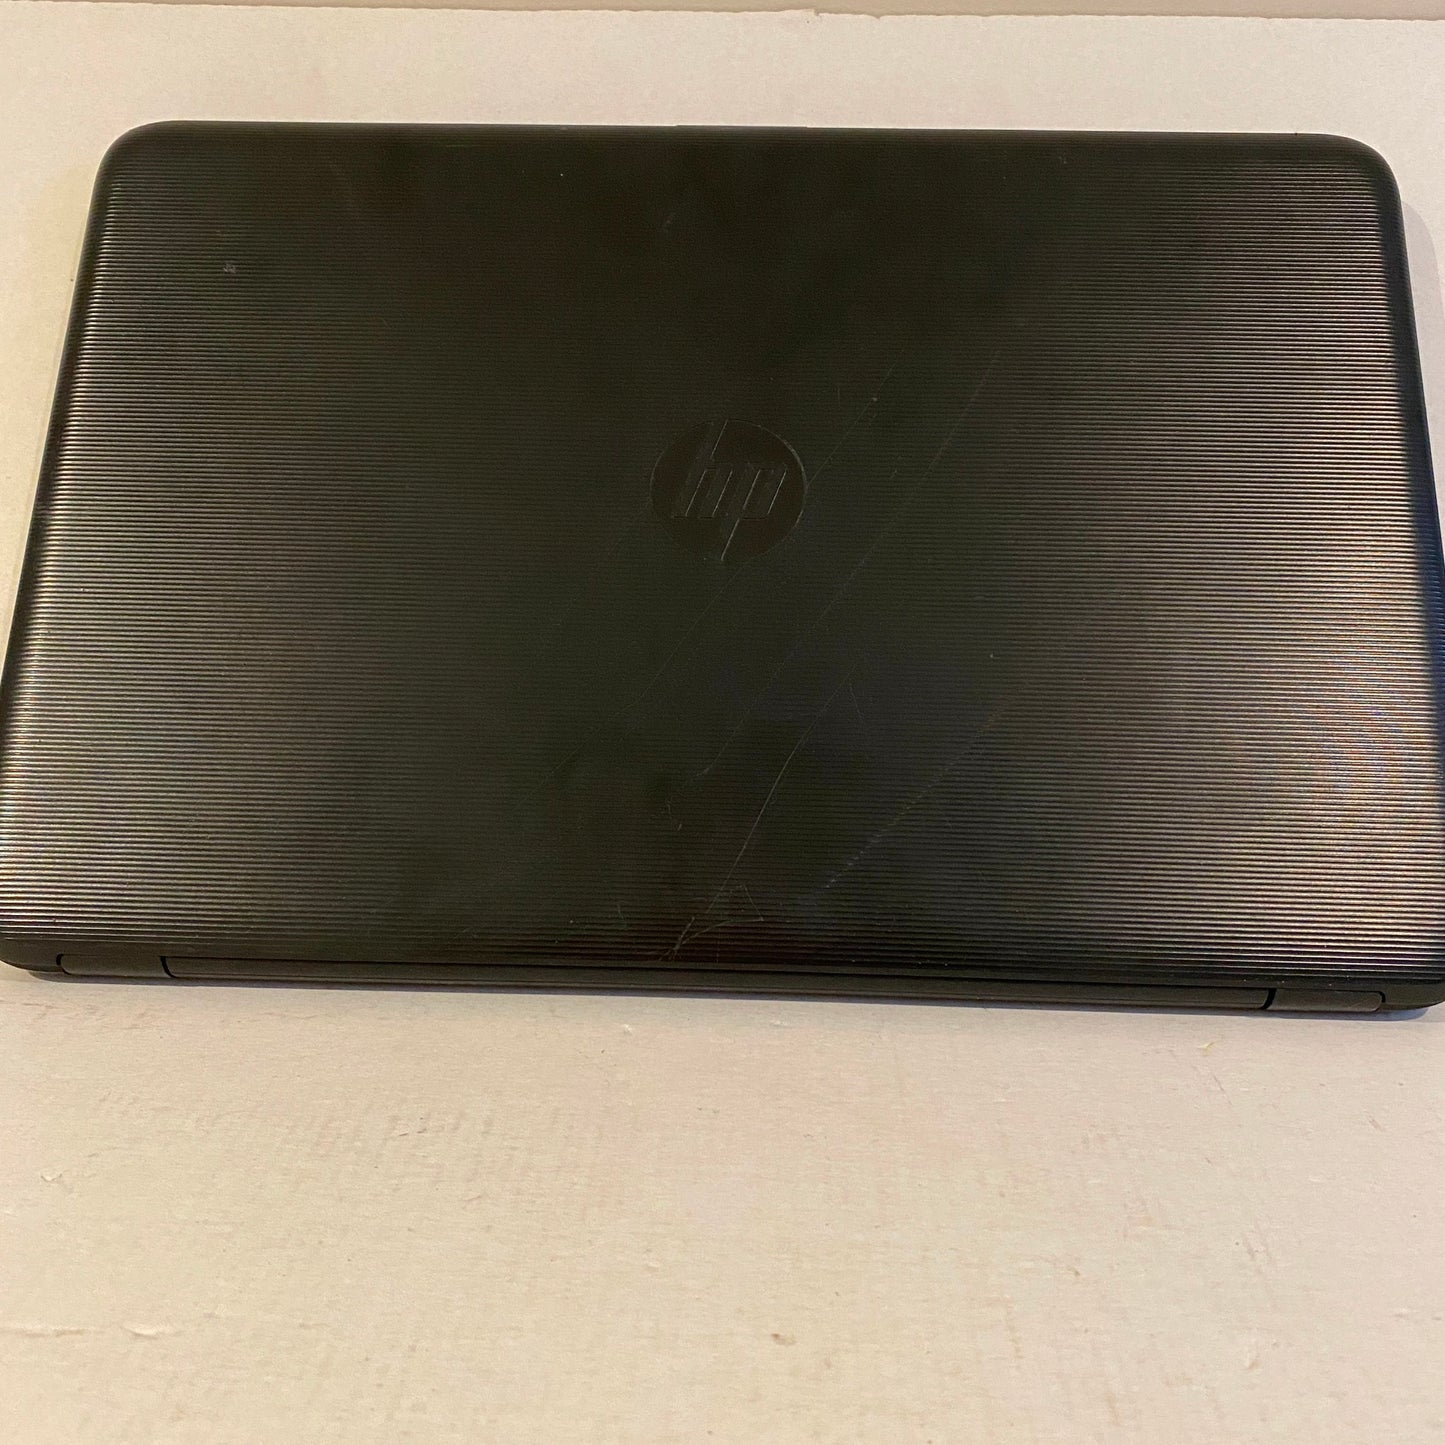 For Repair - HP 15.6" 255 G5 Laptop AMD A6-7310 Quad-Core 4GB RAM No HDD